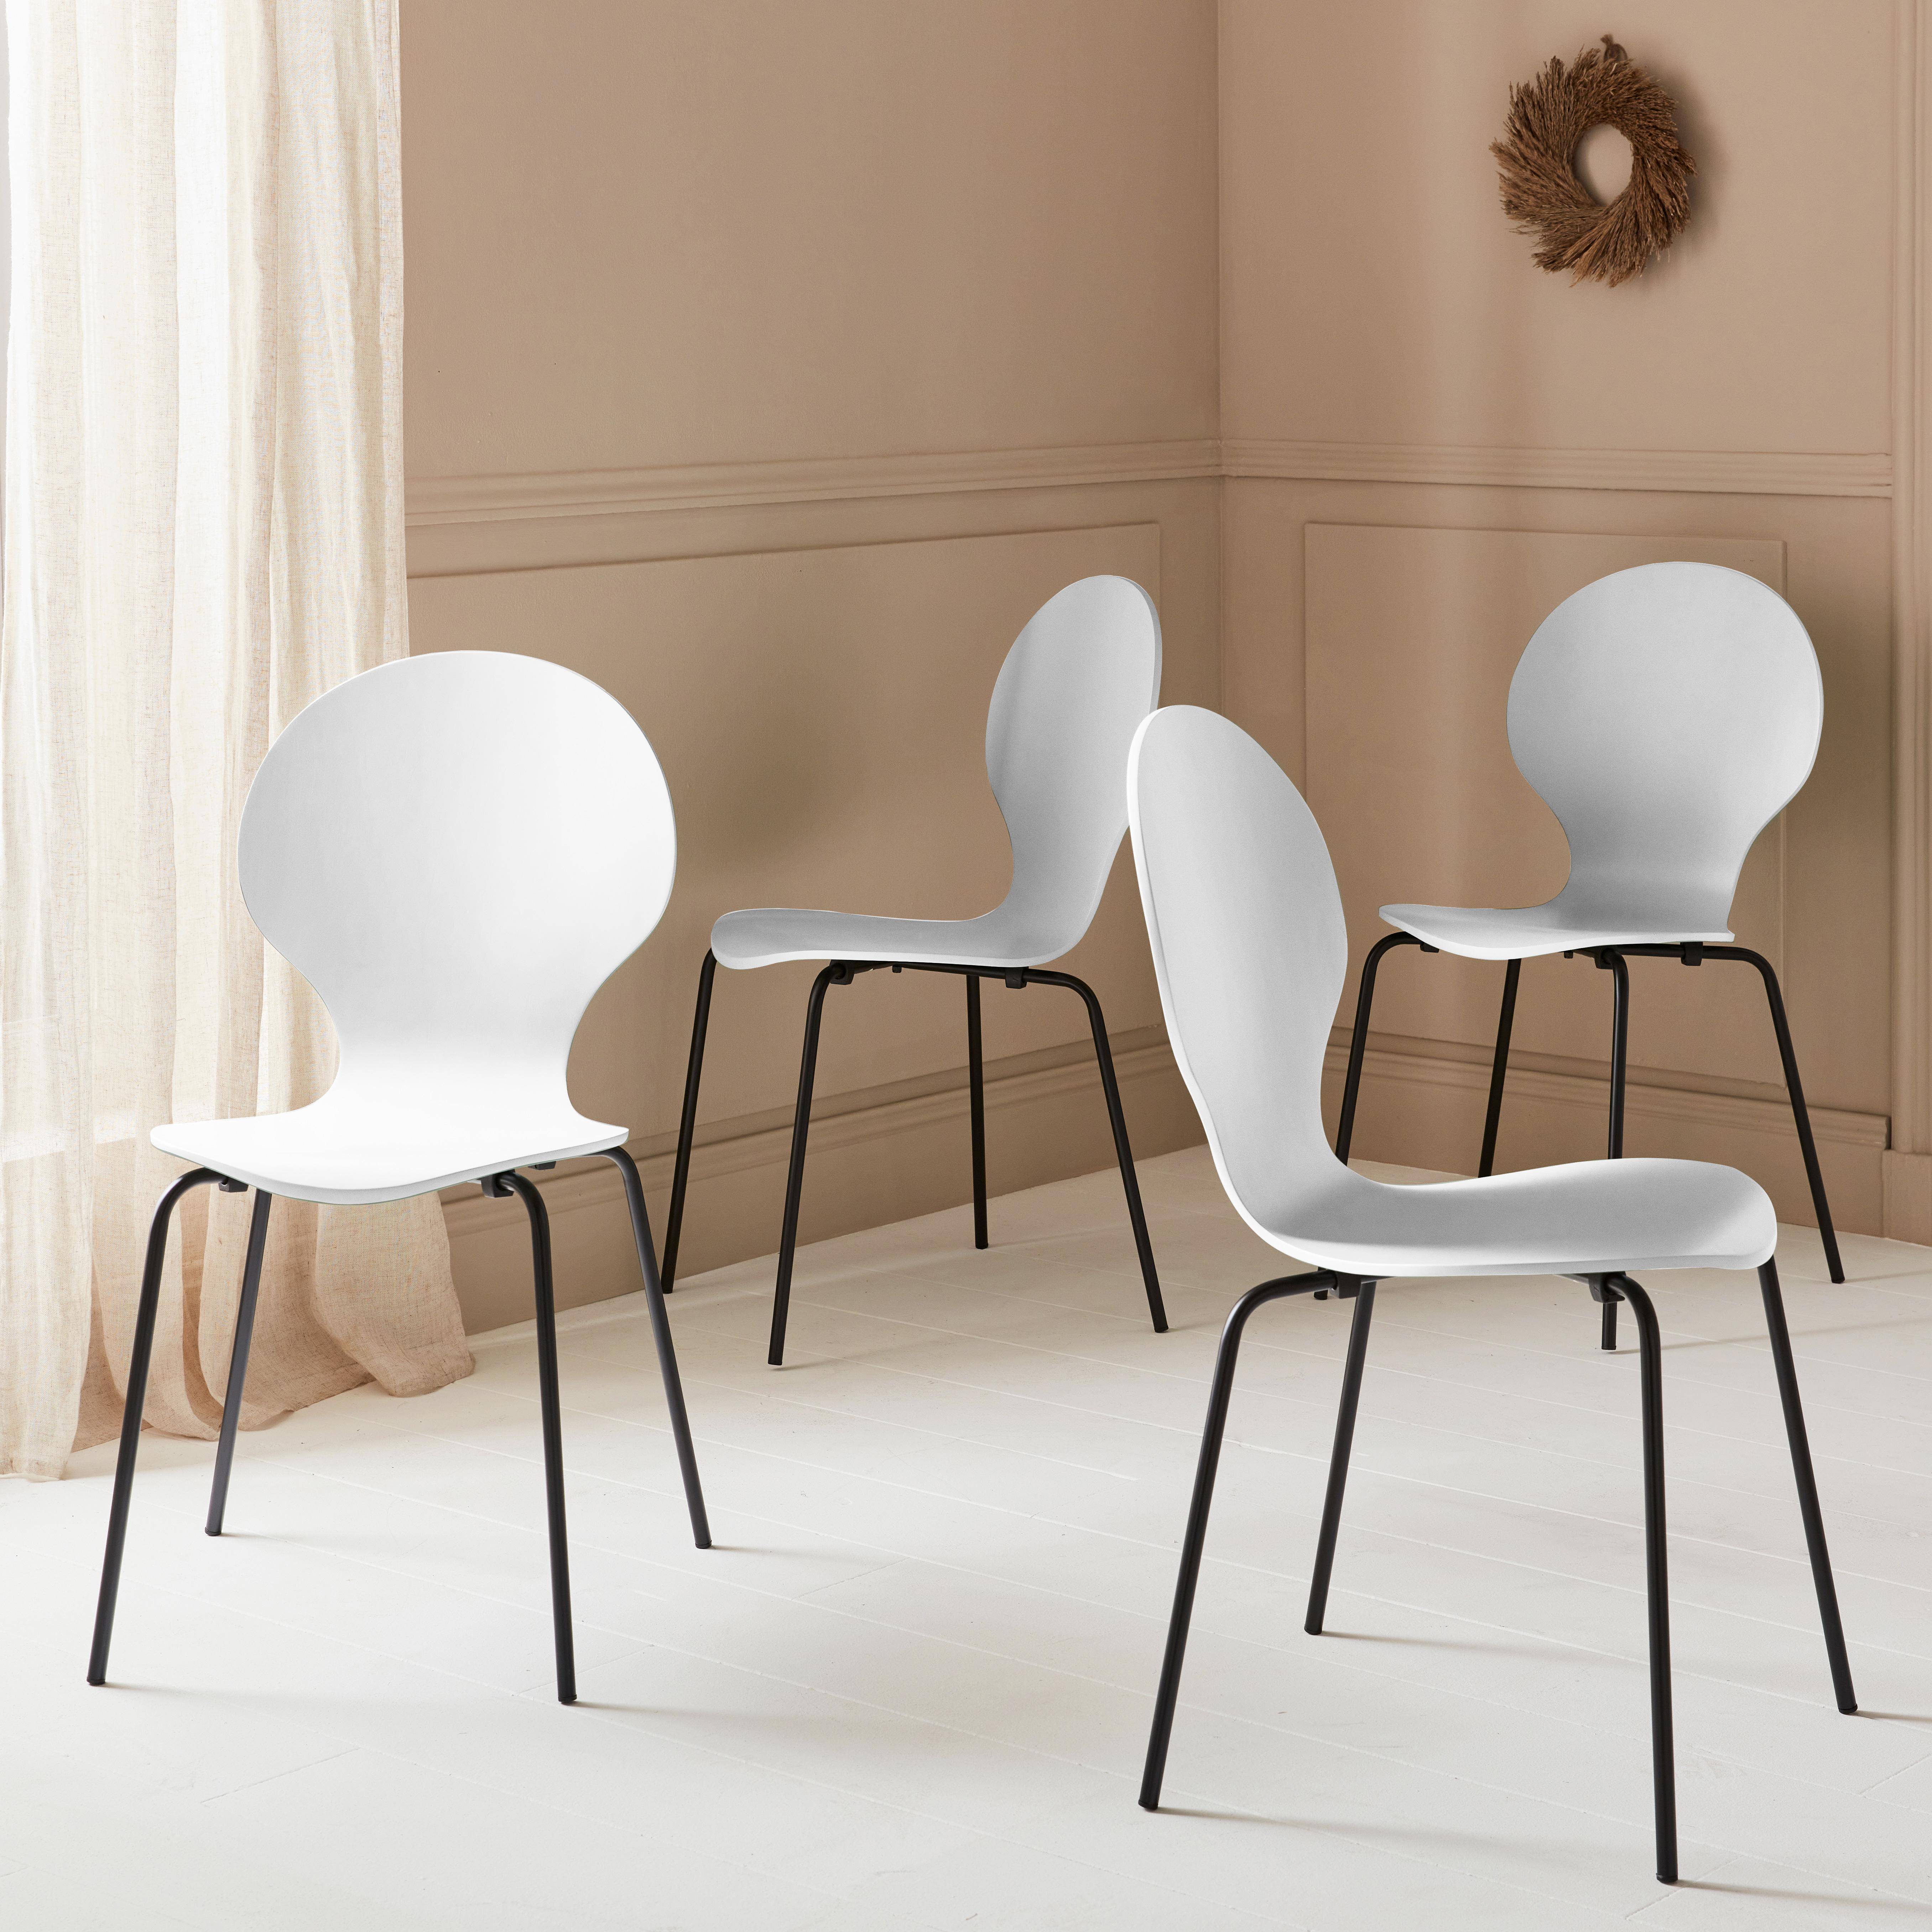 Set van 4 witte retro stapelstoelen, hevea hout en multiplex, stalen poten, Naomi, B 43 x D 48 x H 87cm,sweeek,Photo2